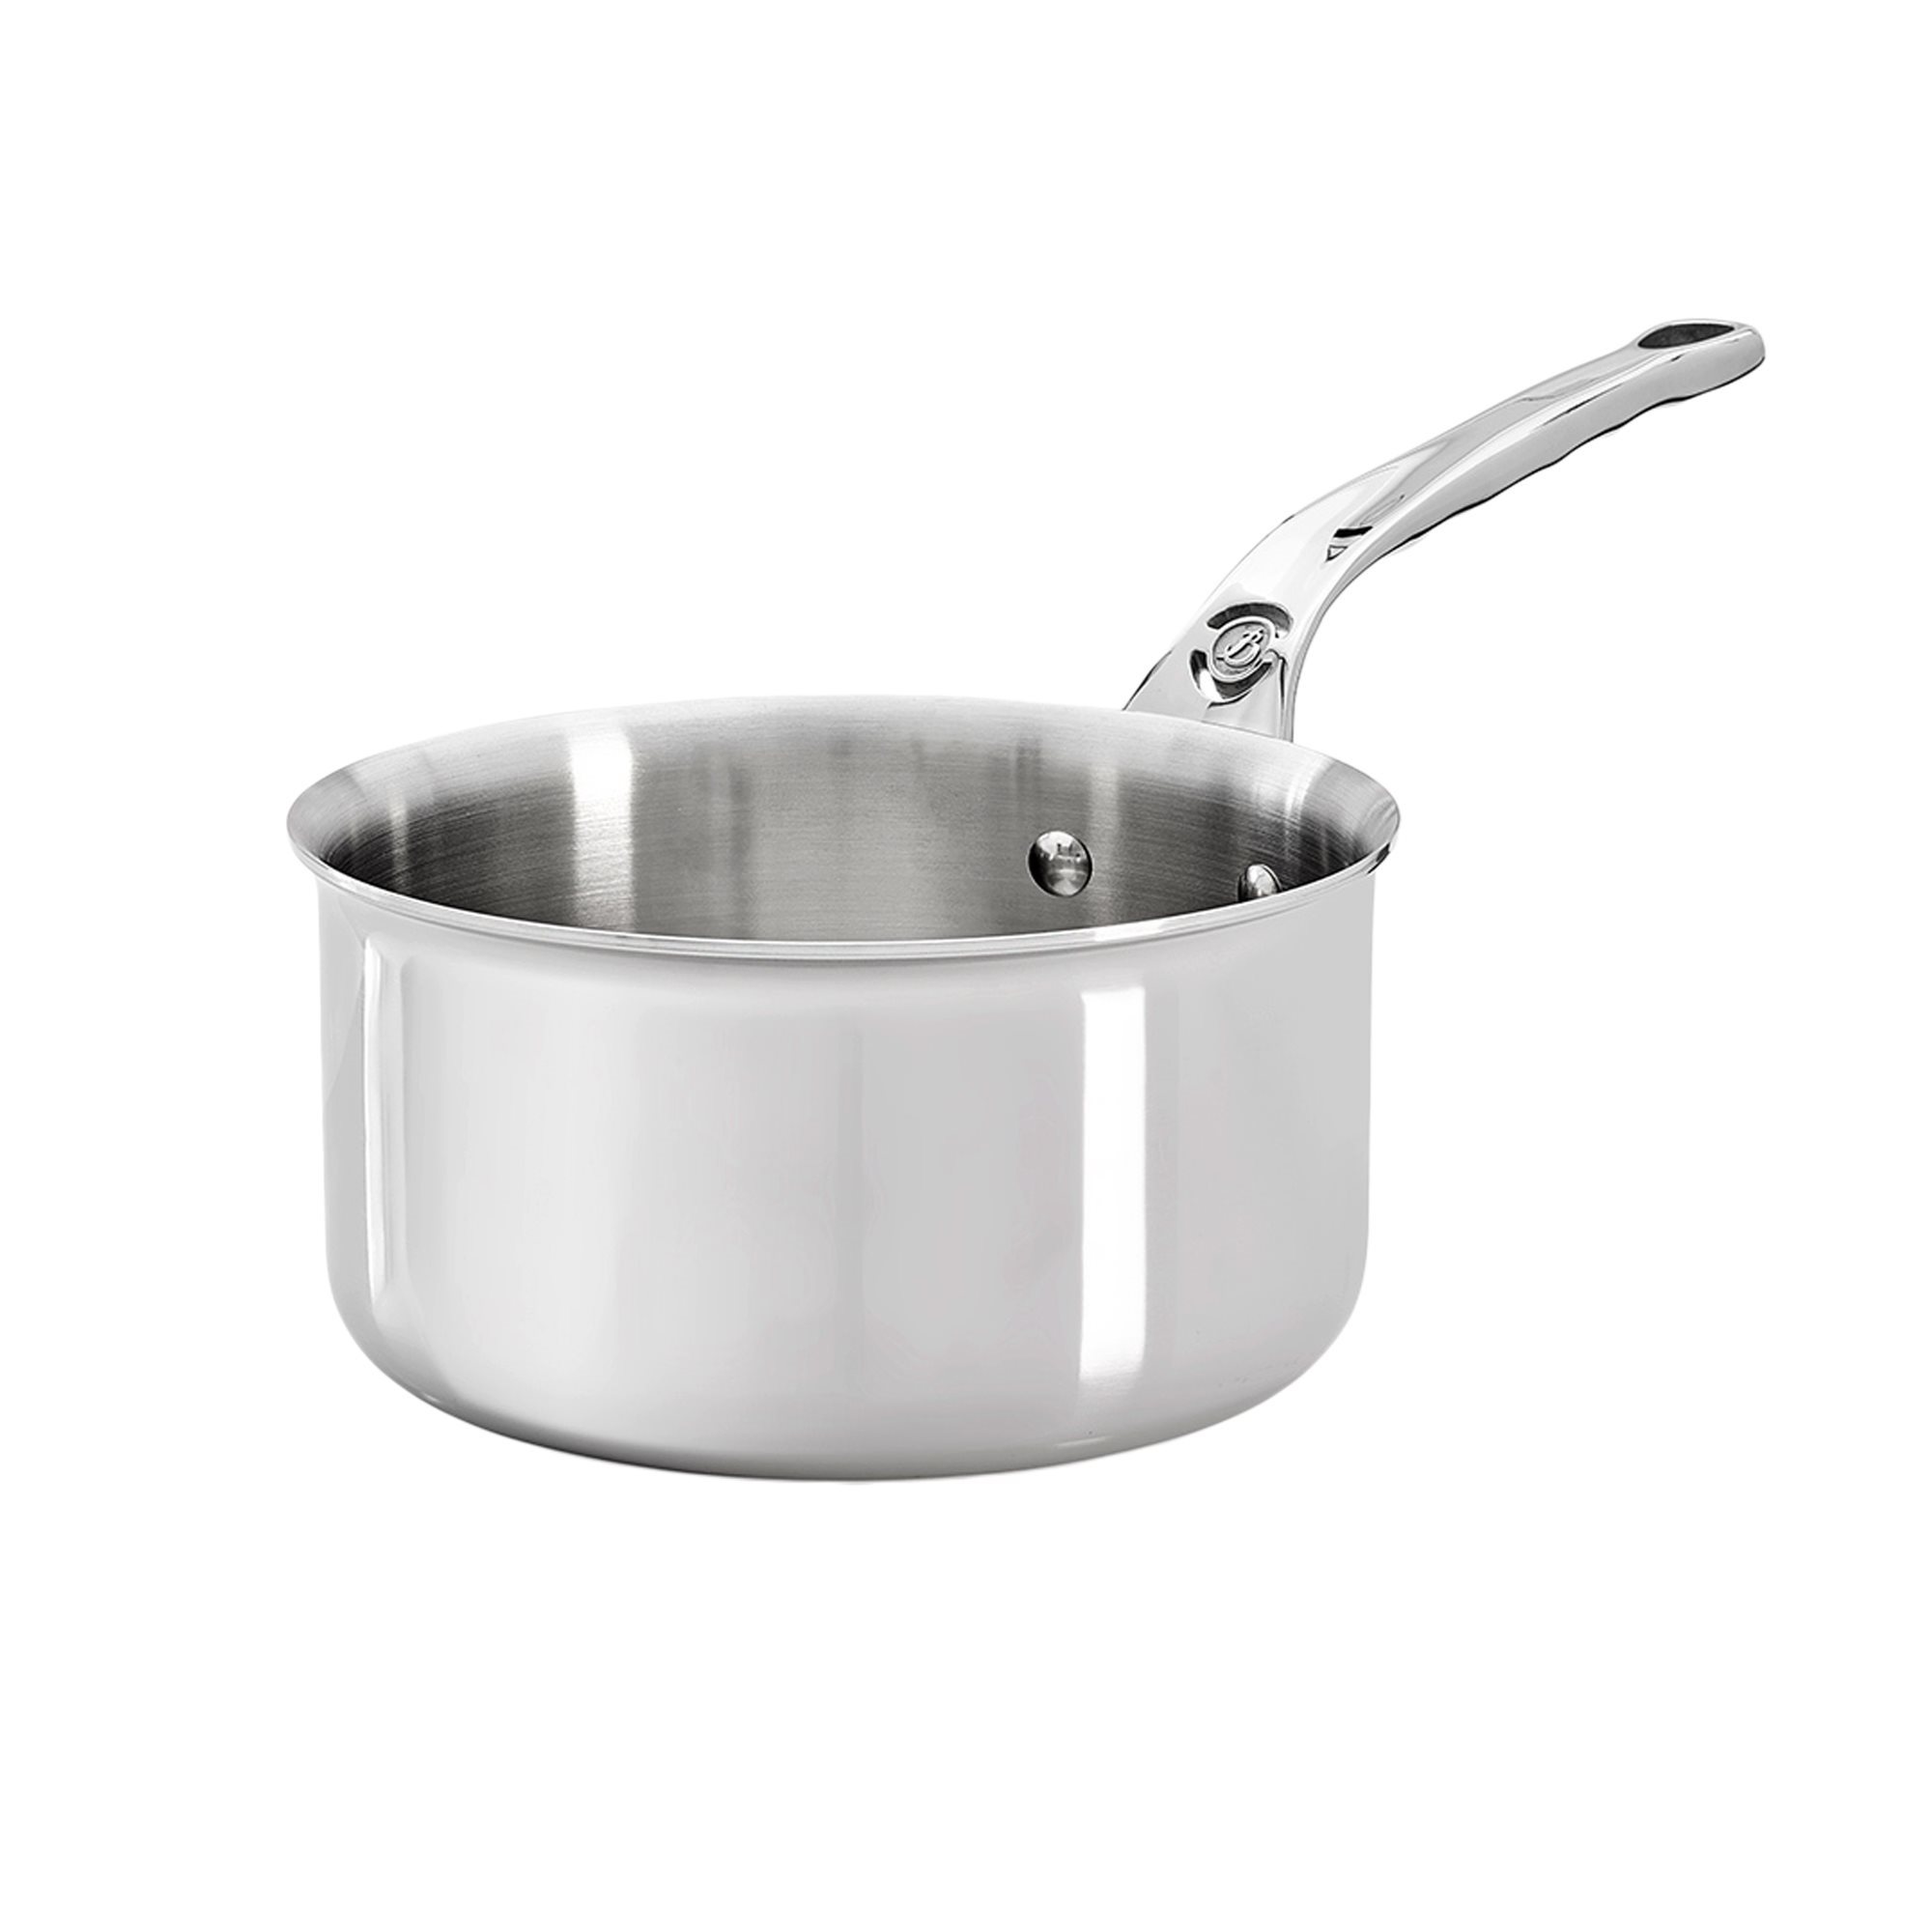 Affinity saucepan, stainless steel, 24 cm / 5.8 l - de Buyer brand